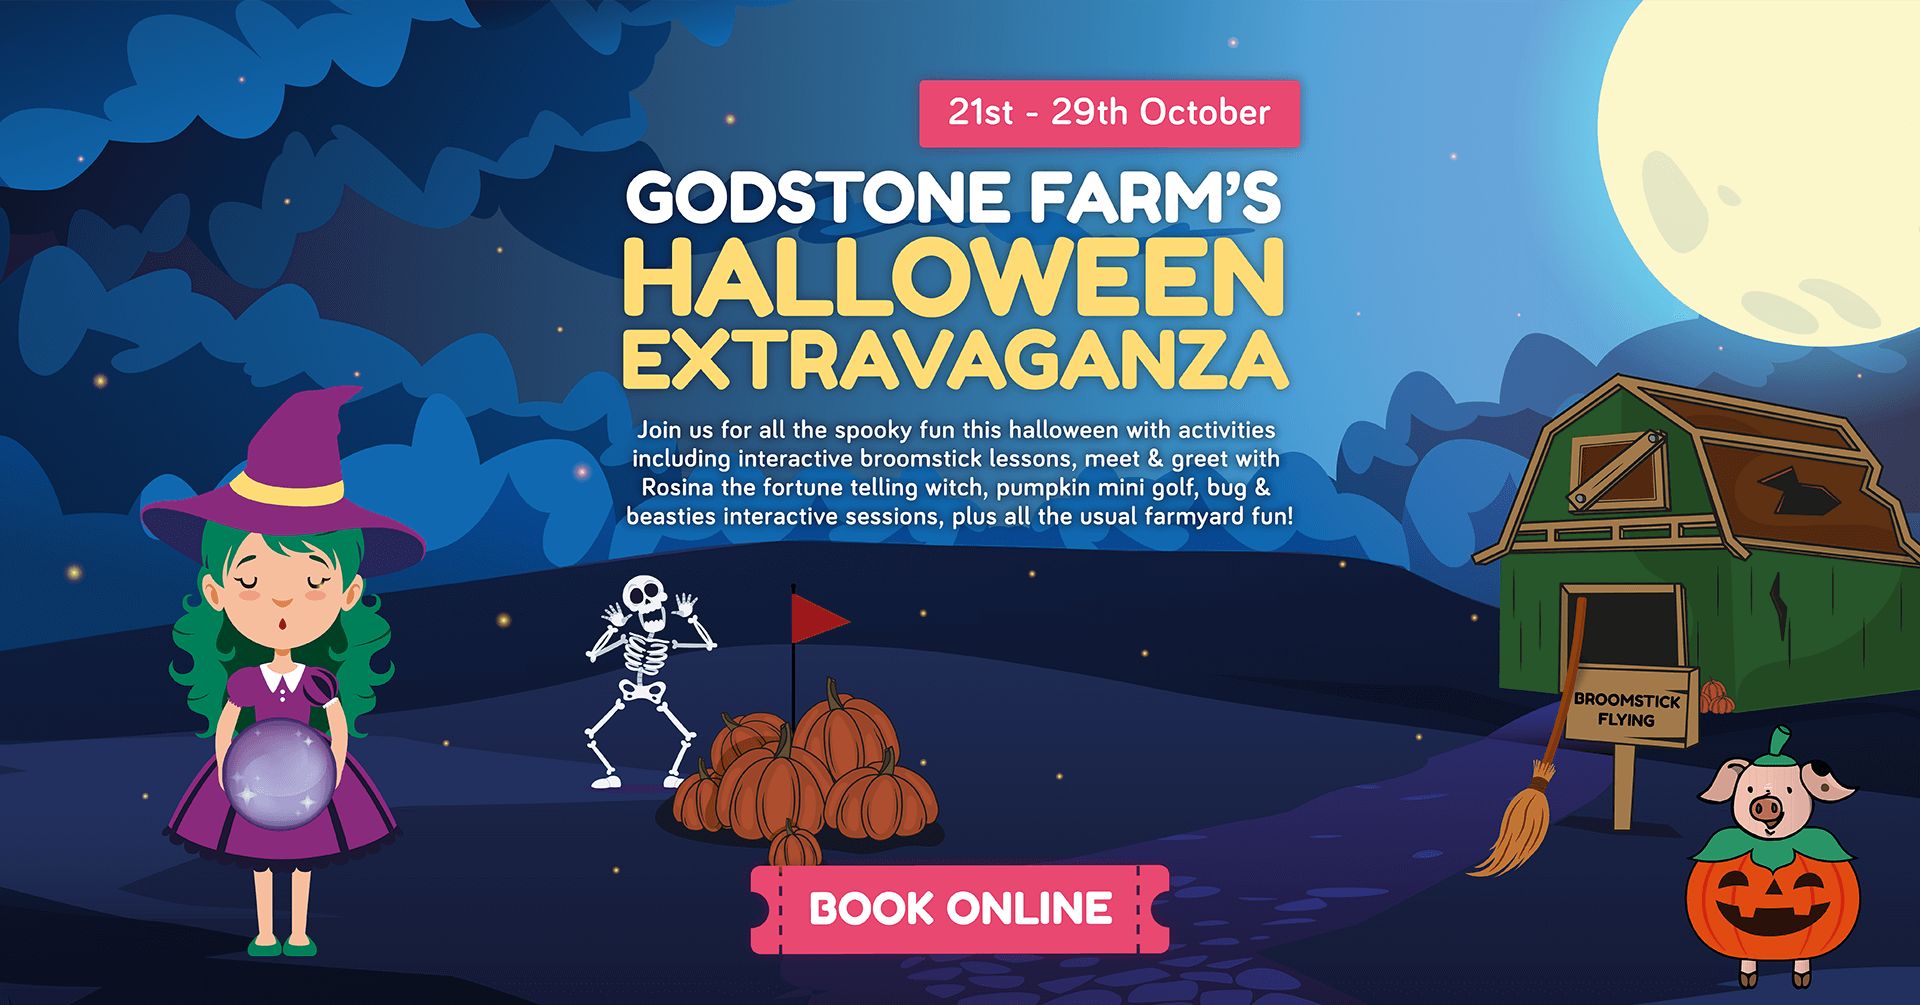 Halloween Extravaganza at Godstone Farm - Godstone Farm & Playbarn